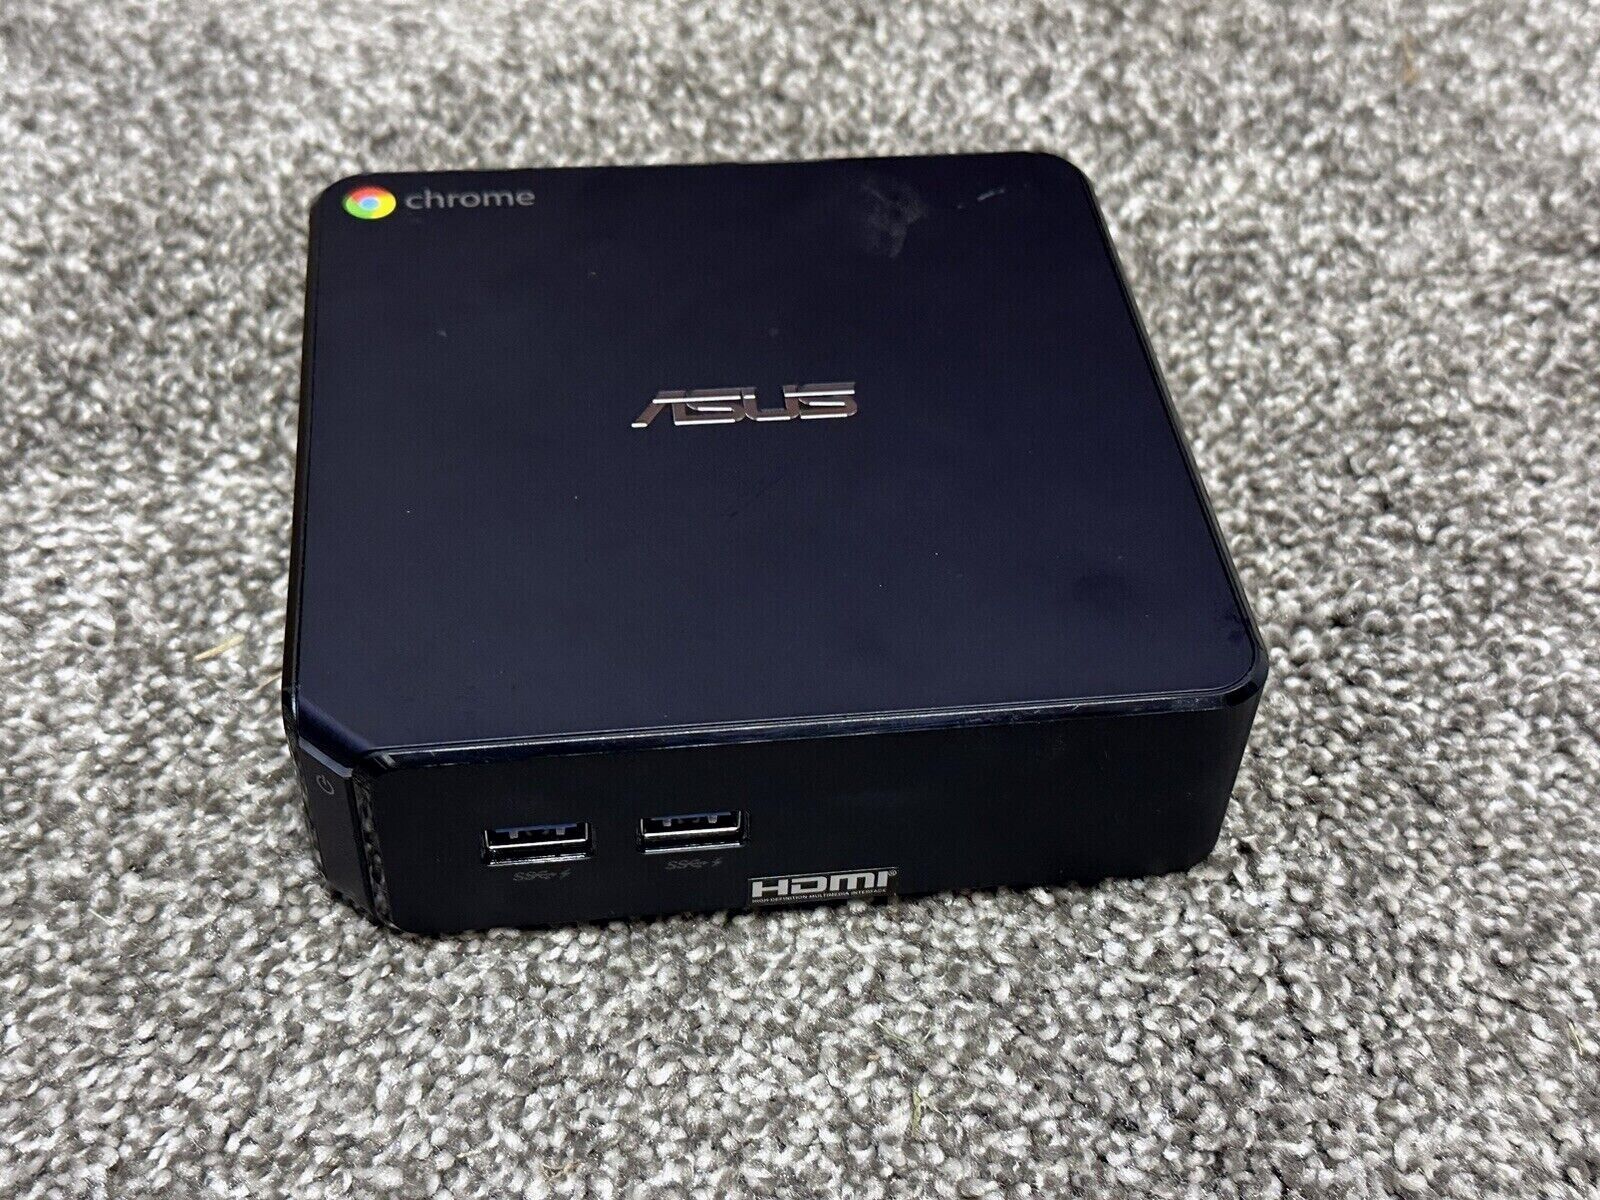 ASUS Chromebox CN60 (16gb SSD, Intel Celeron, 1.40ghz, 2gb RAM) Desktop - Black